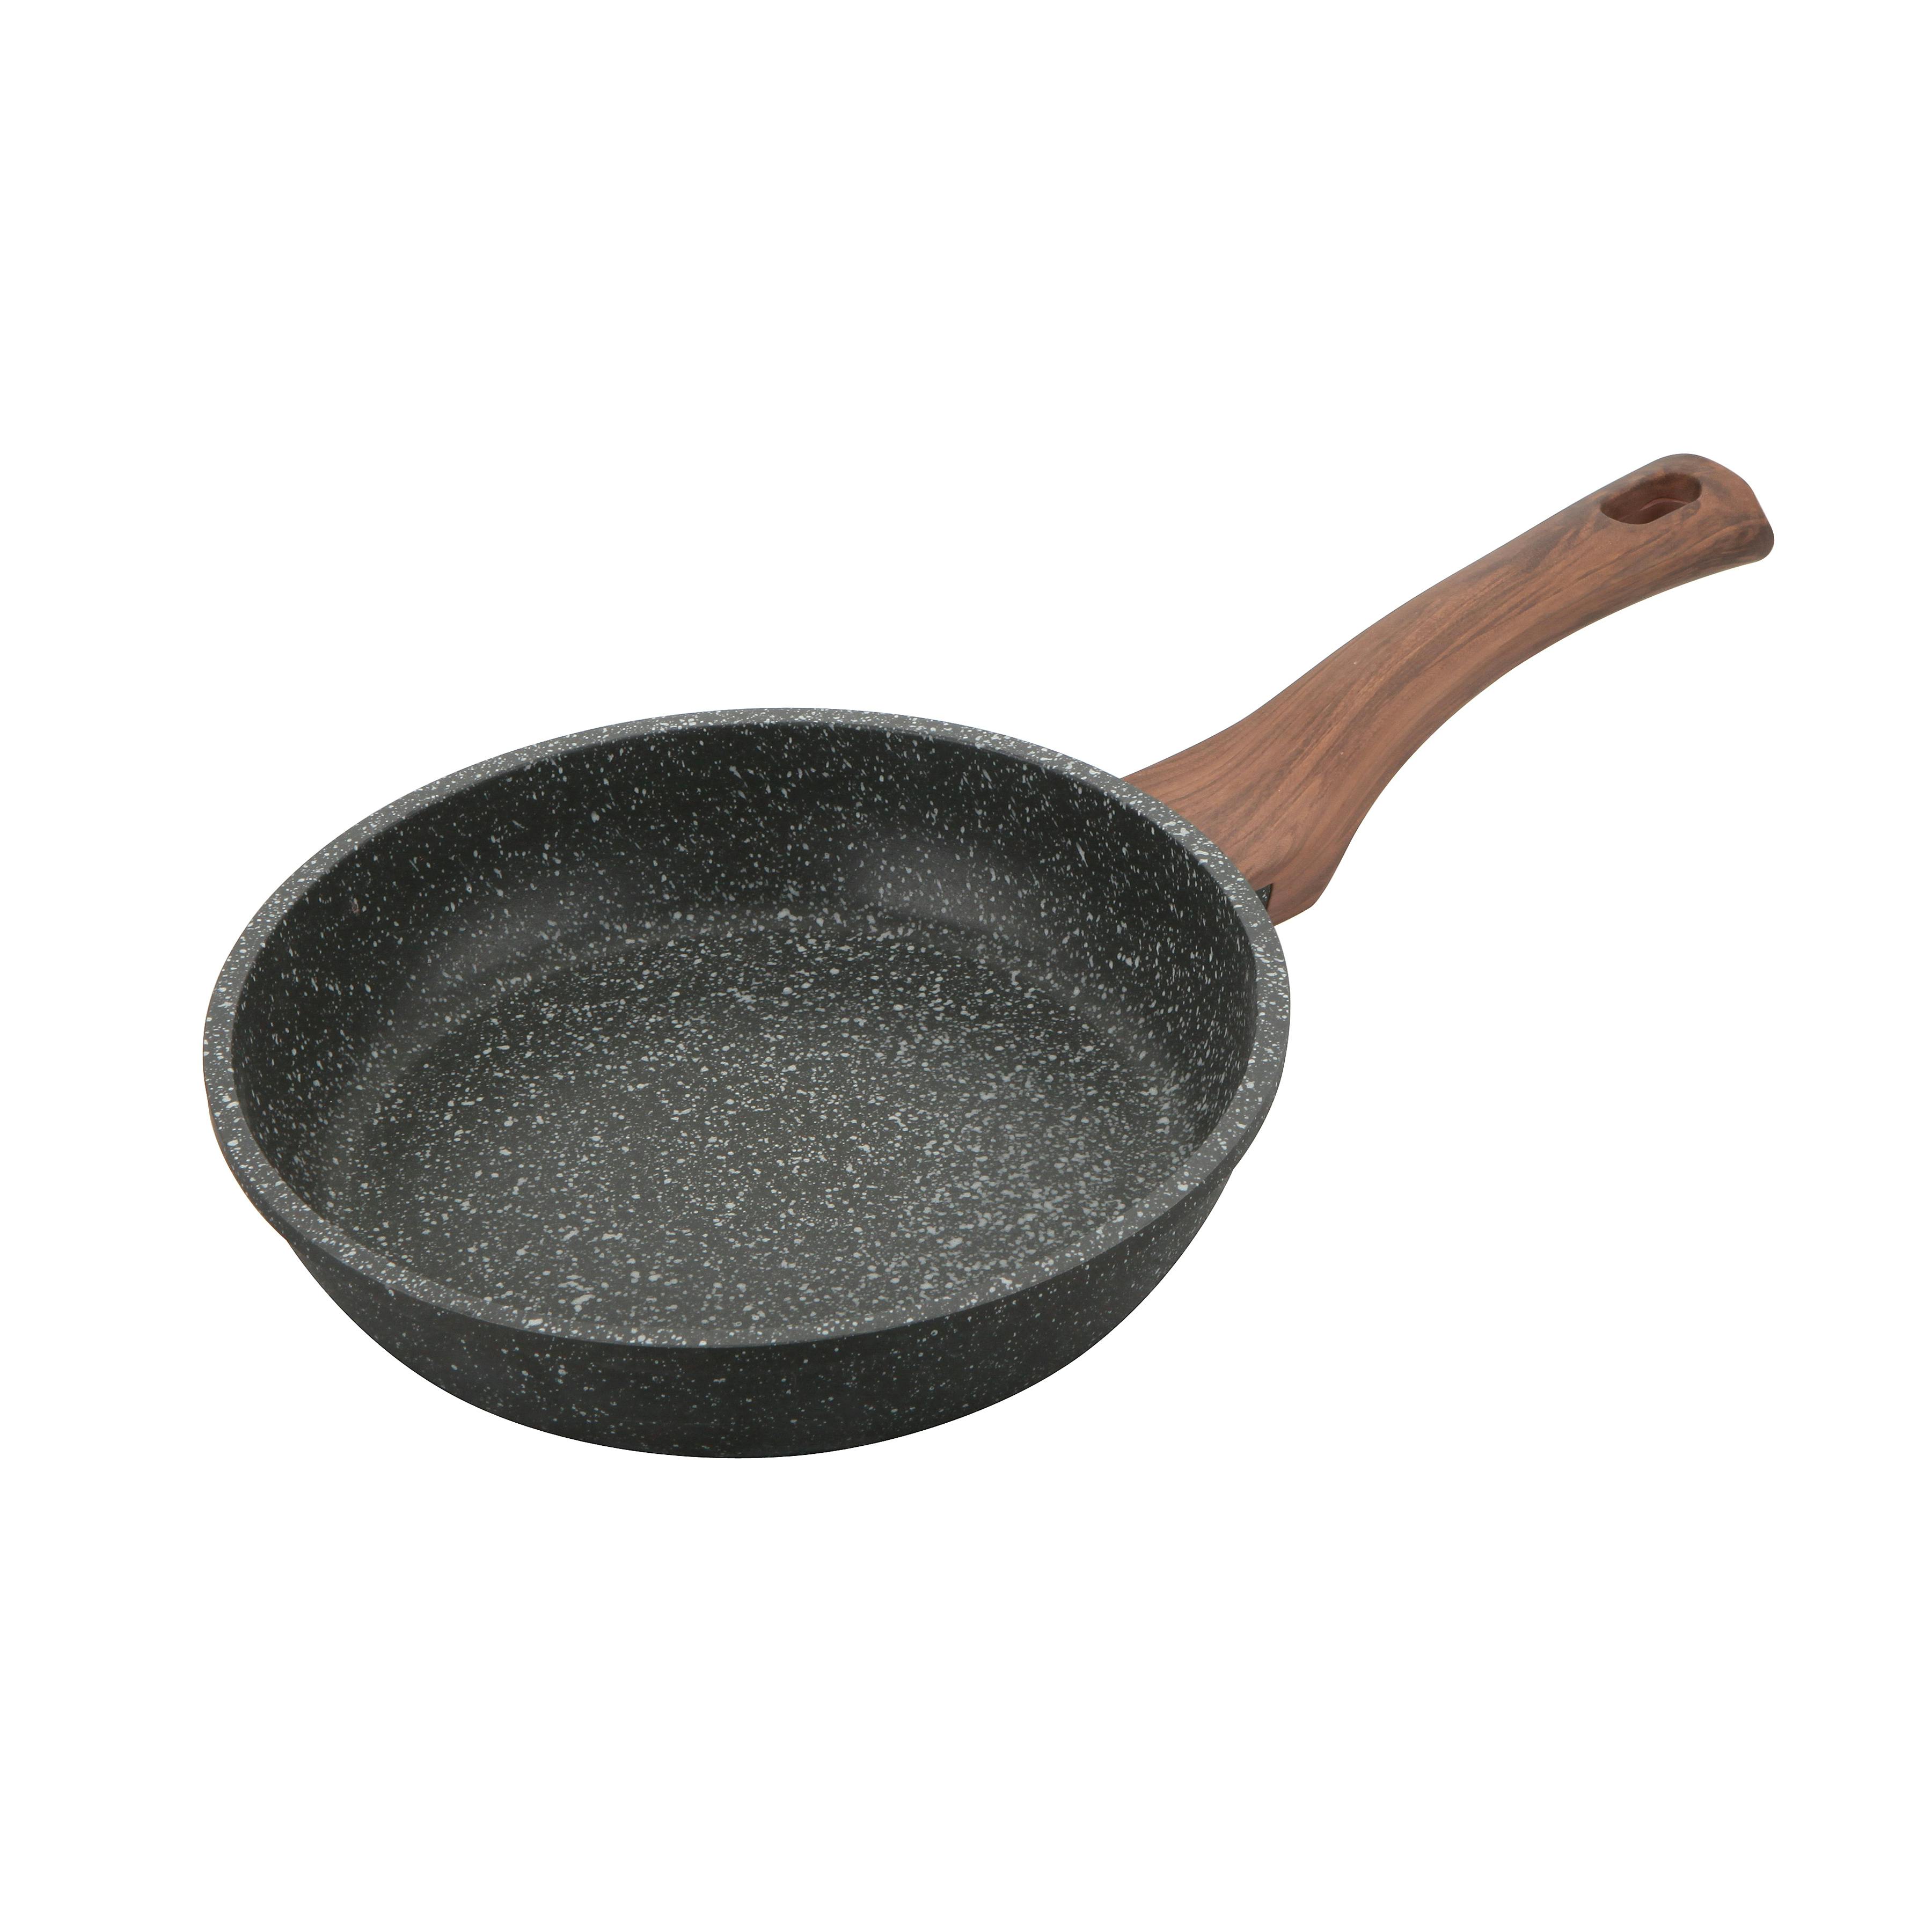 AllTopBargains 2 Scratch Free Reusable Nylon Pot Pan Scraper Clean Food Fry Plate Bowl Ceramic, White